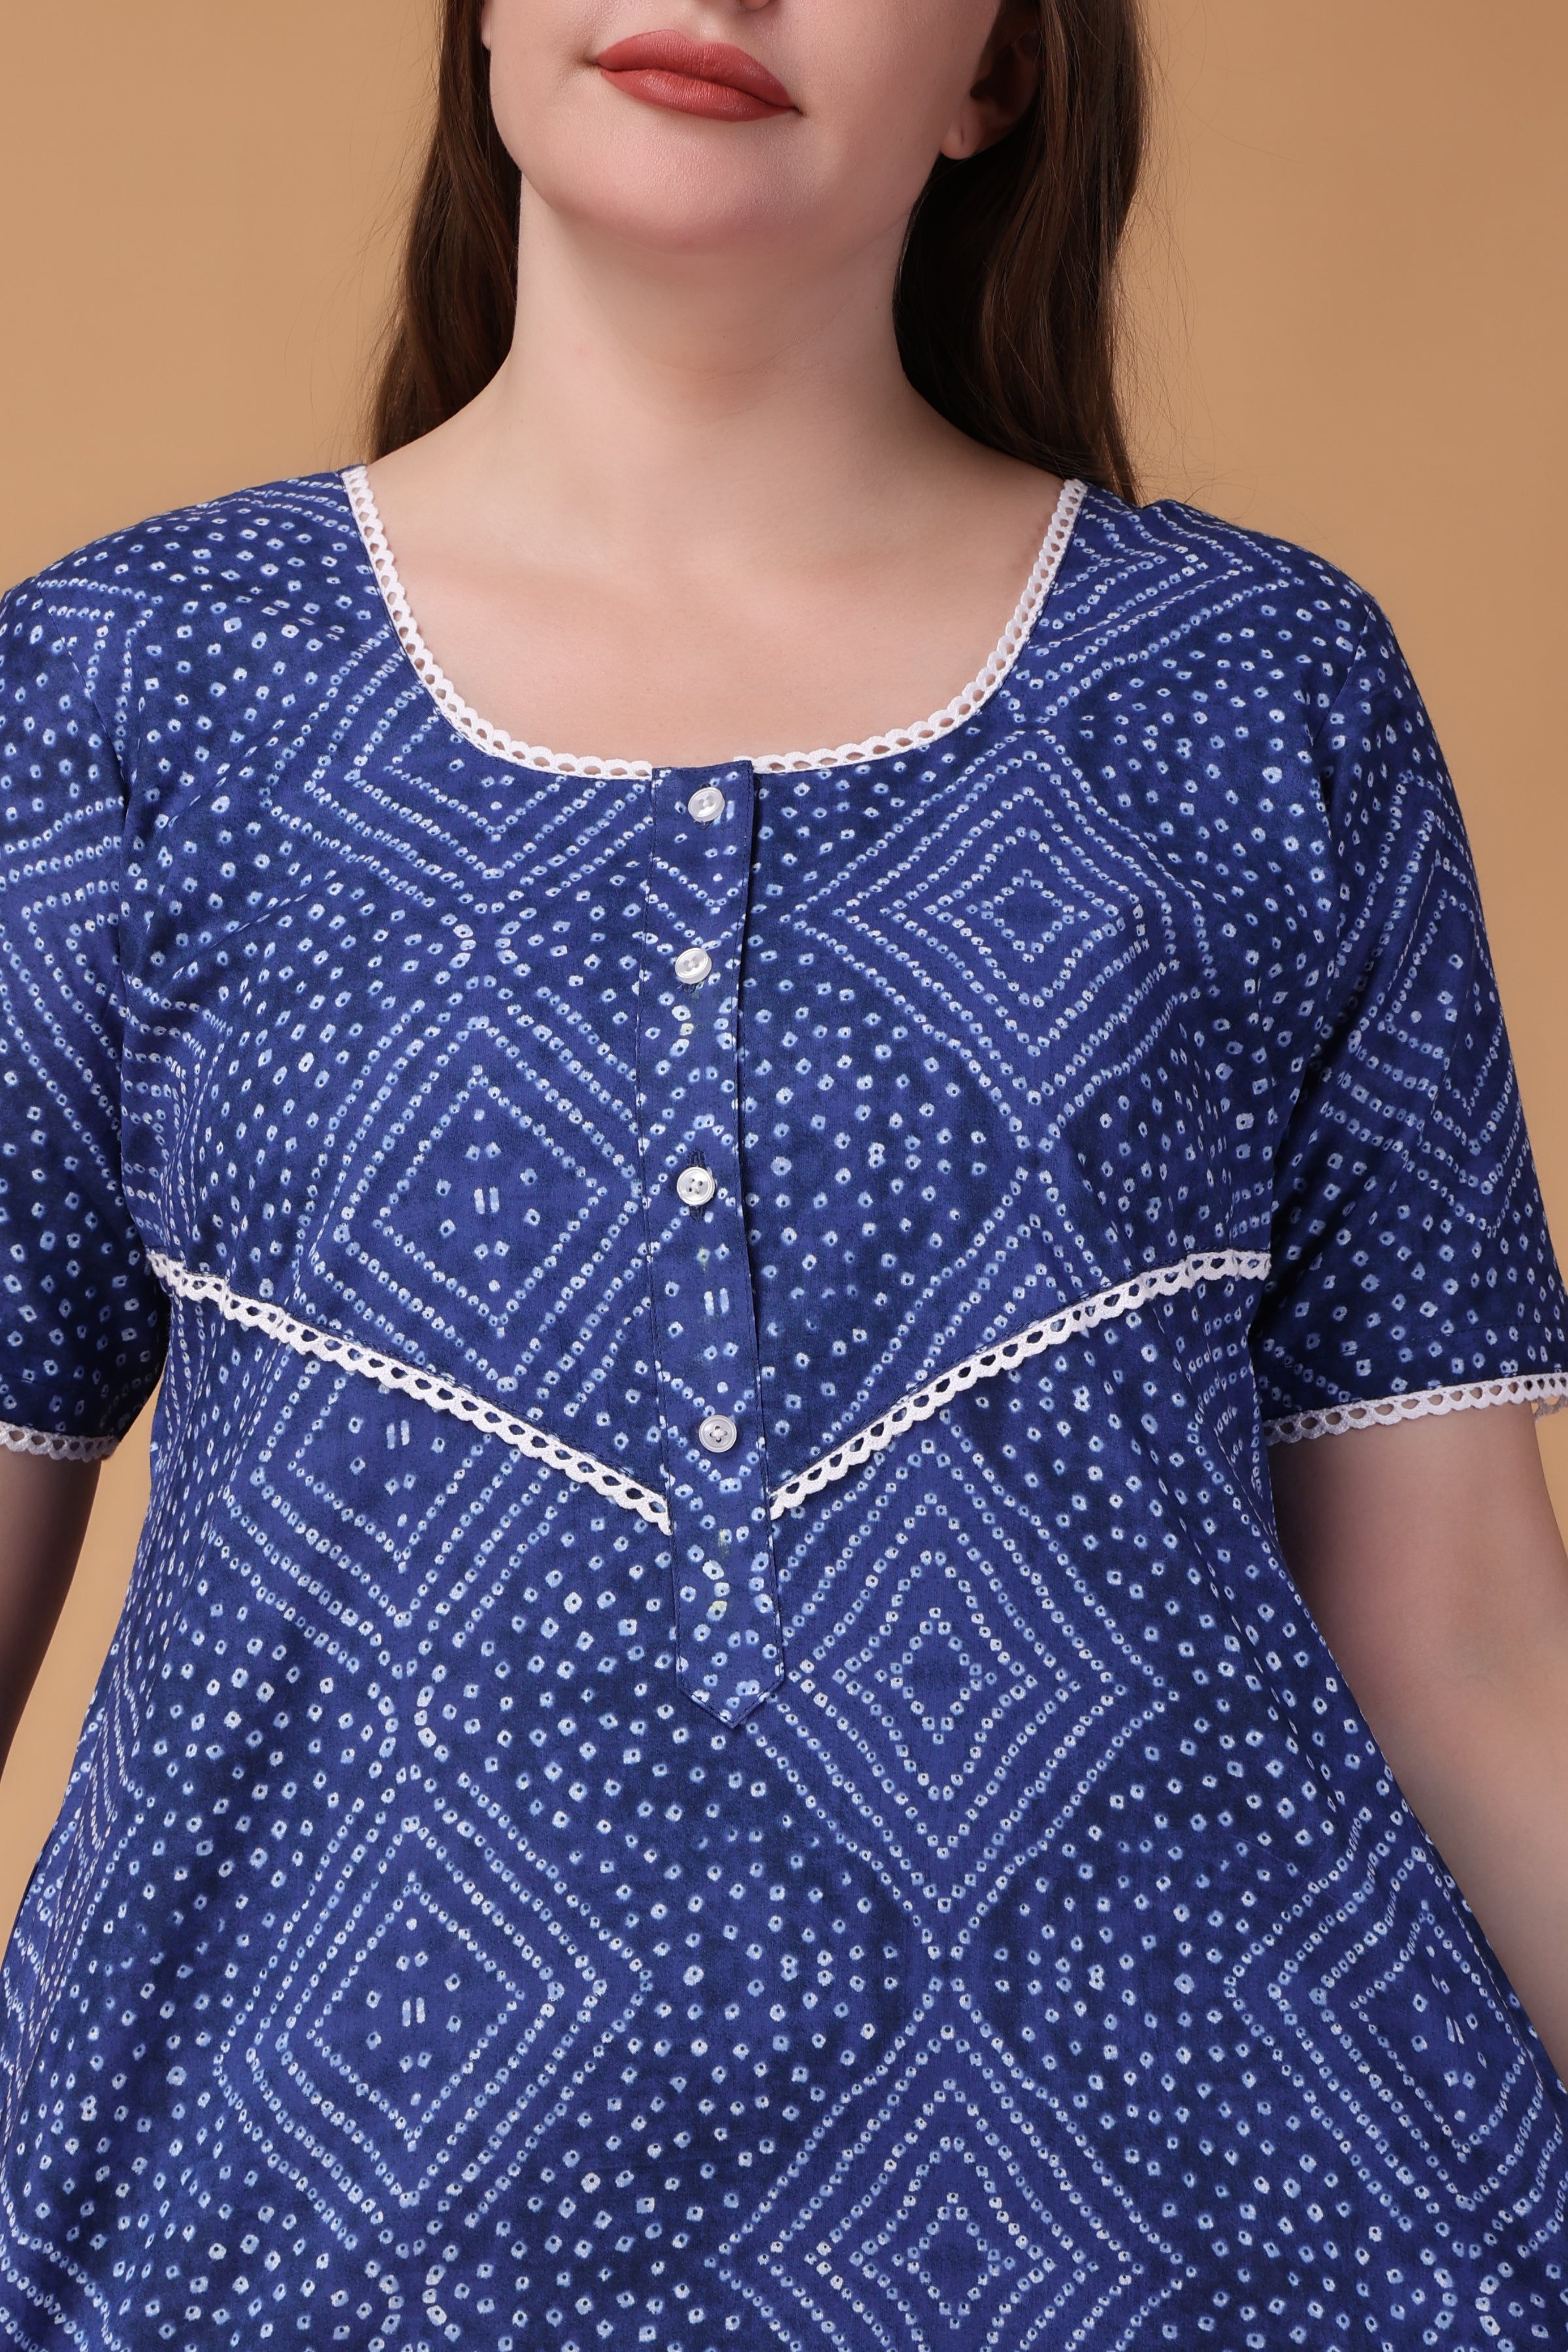 Women's Cotton Sleep Shirt T-Shirt Night Gown Tee Nightshirt Dress Oversize  | eBay